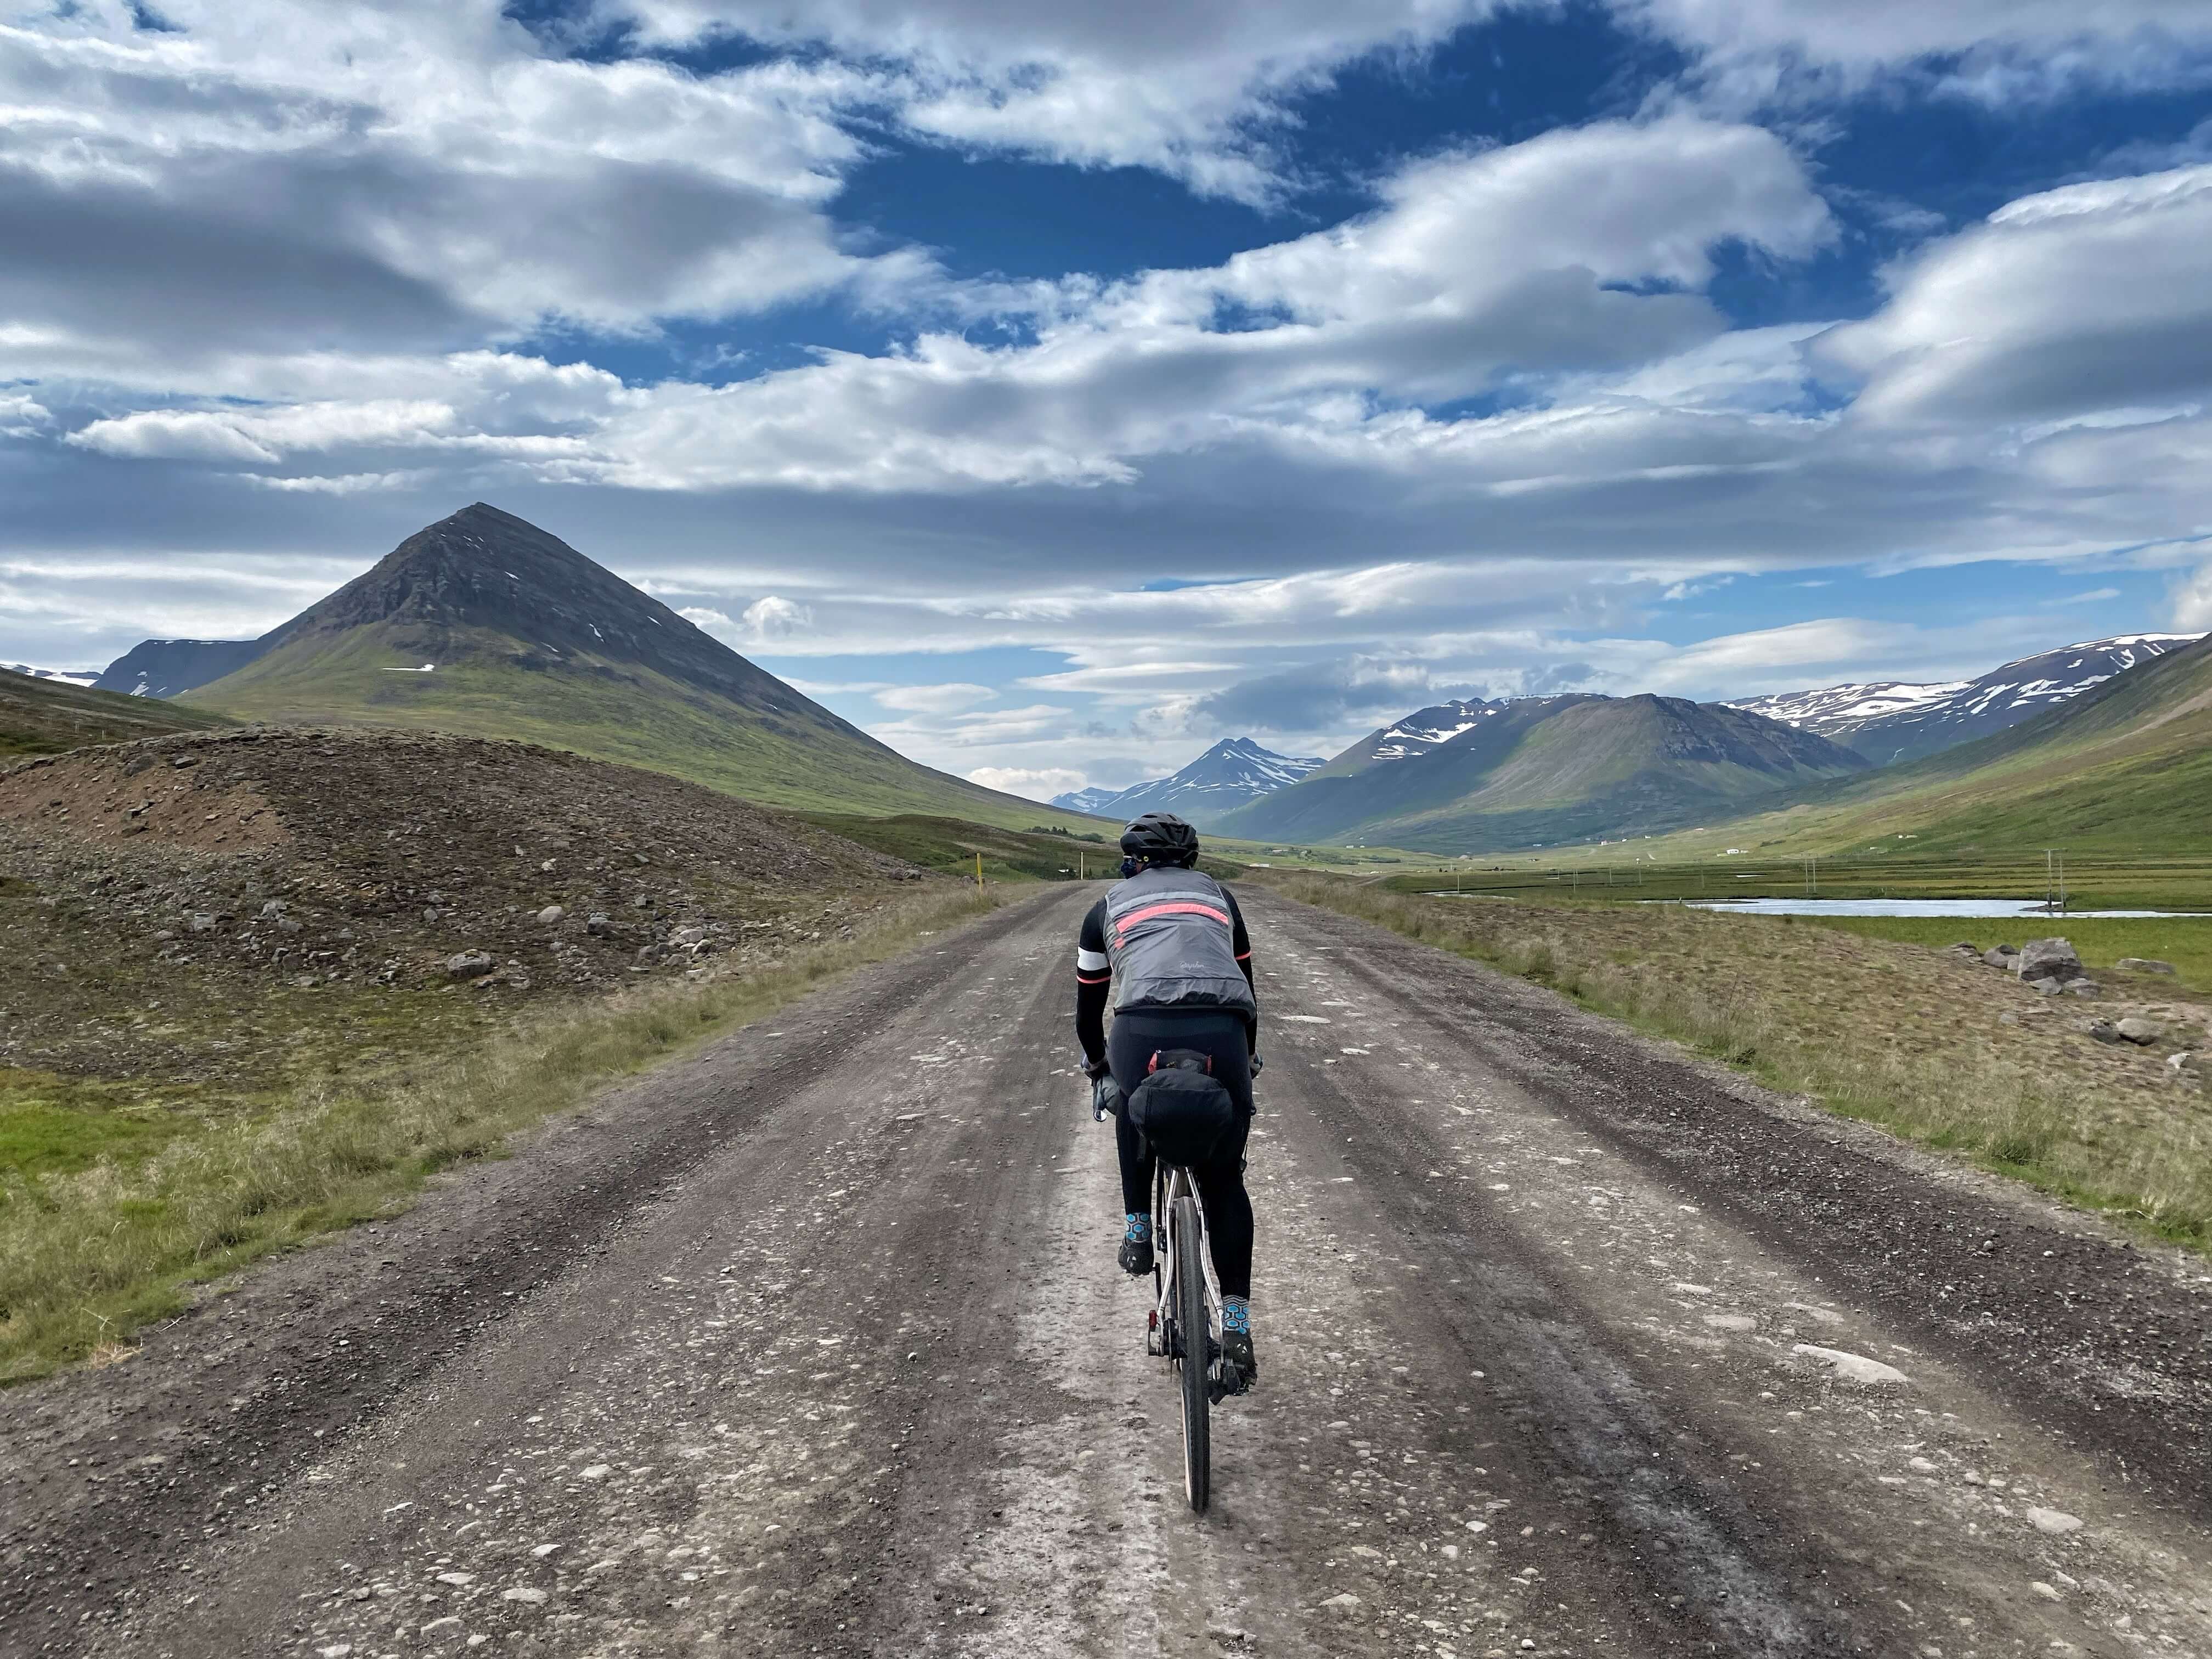 Riding shimano grx equipped gravel bikes around Iceland